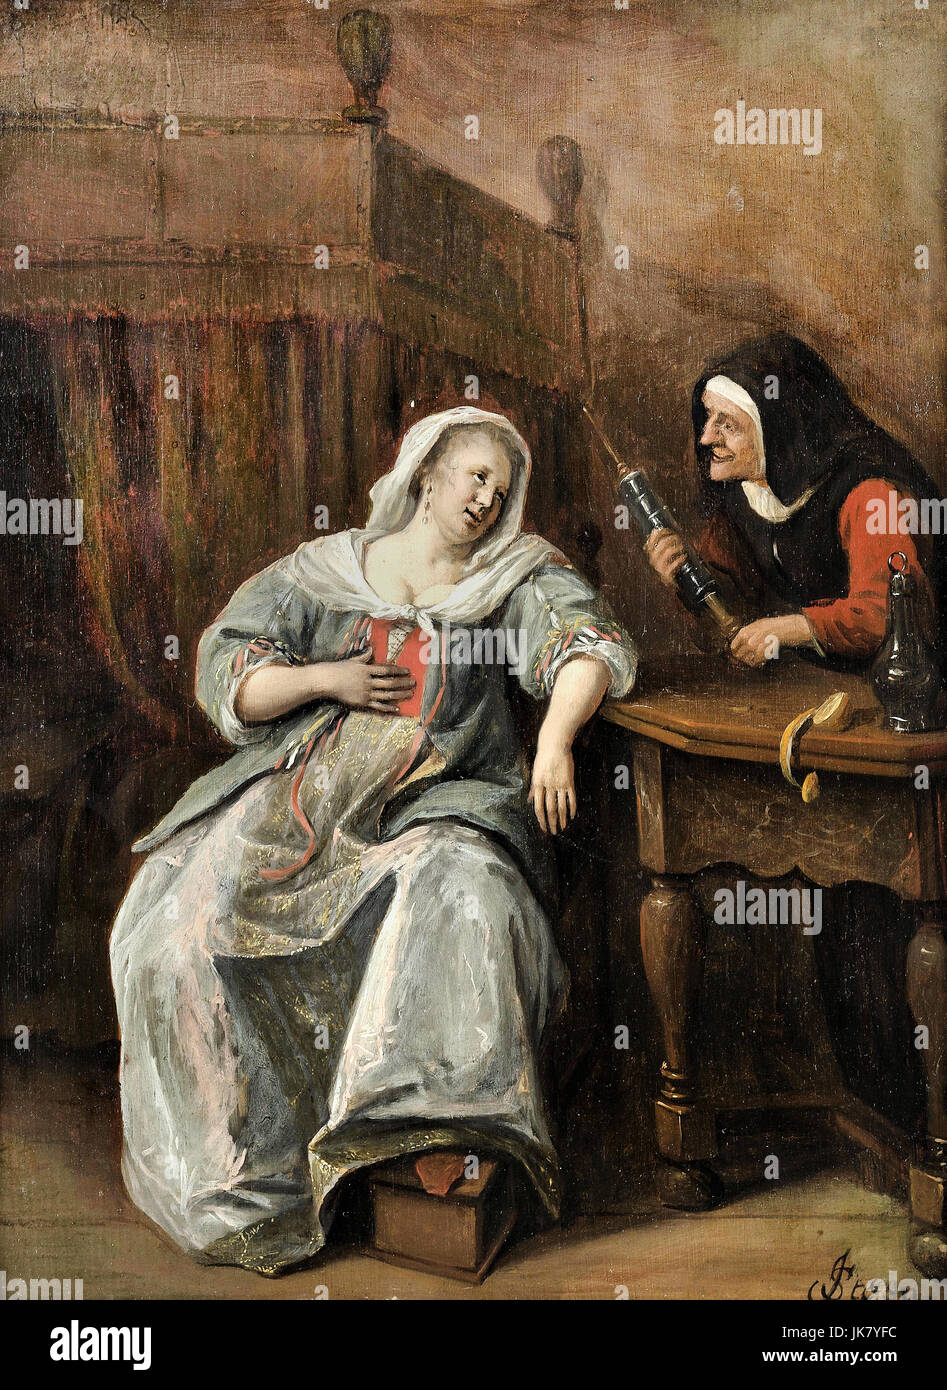 Jan Steen, The Sick Woman. Circa 1660-1670. Oil on panel. Museum Boijmans Van Beuningen, Rotterdam, Netherlands. Stock Photo